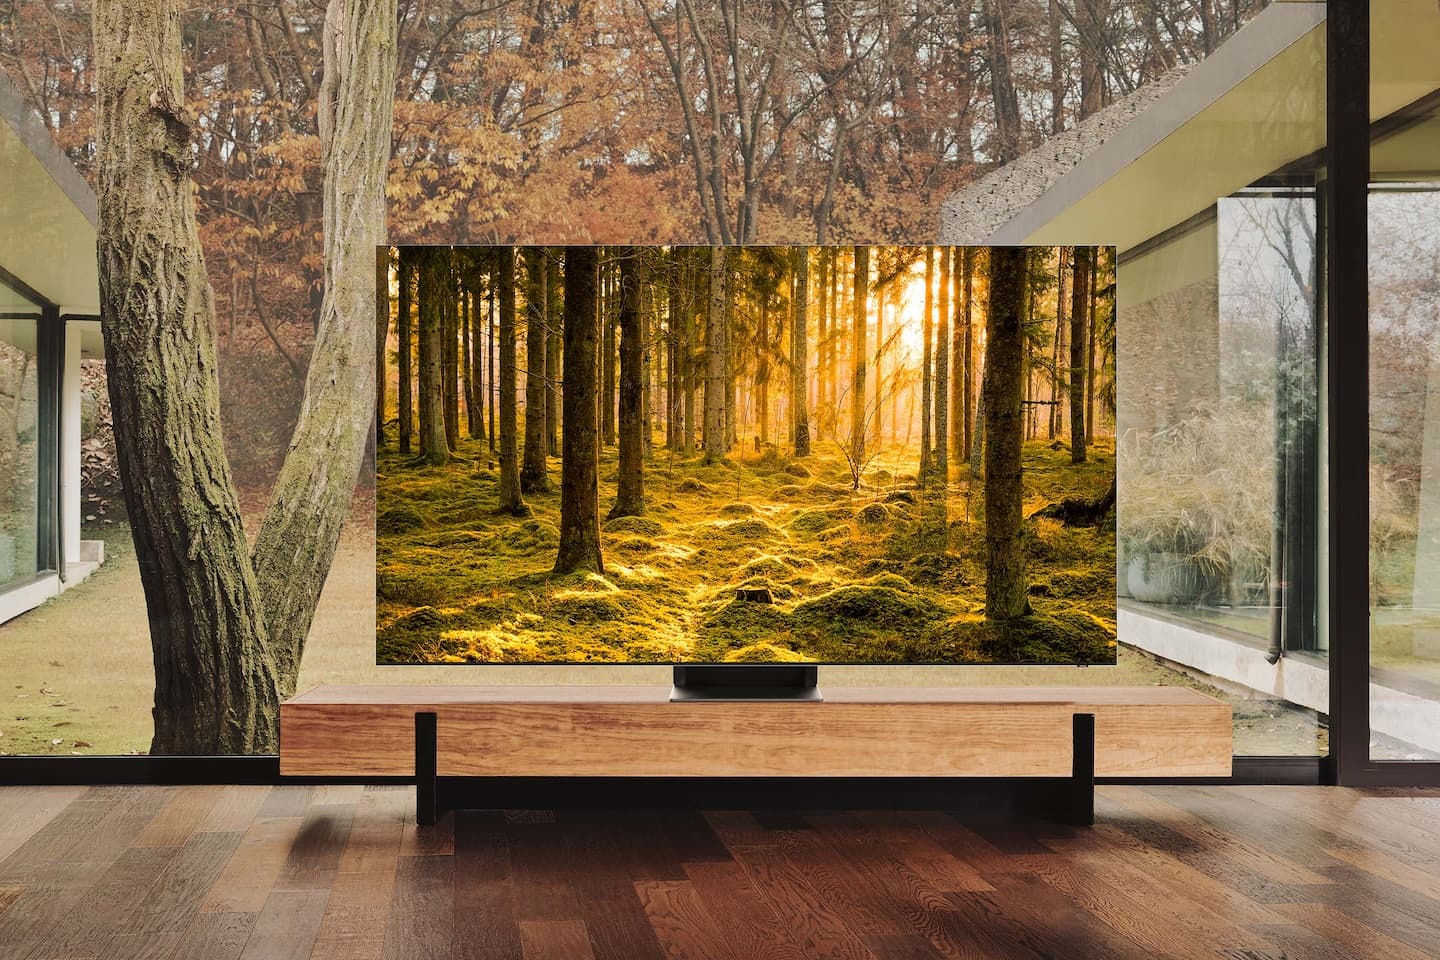 Telewizor QLED 8K Excellence Line Samsung na szafce stojący na tle okna z widokiem na las